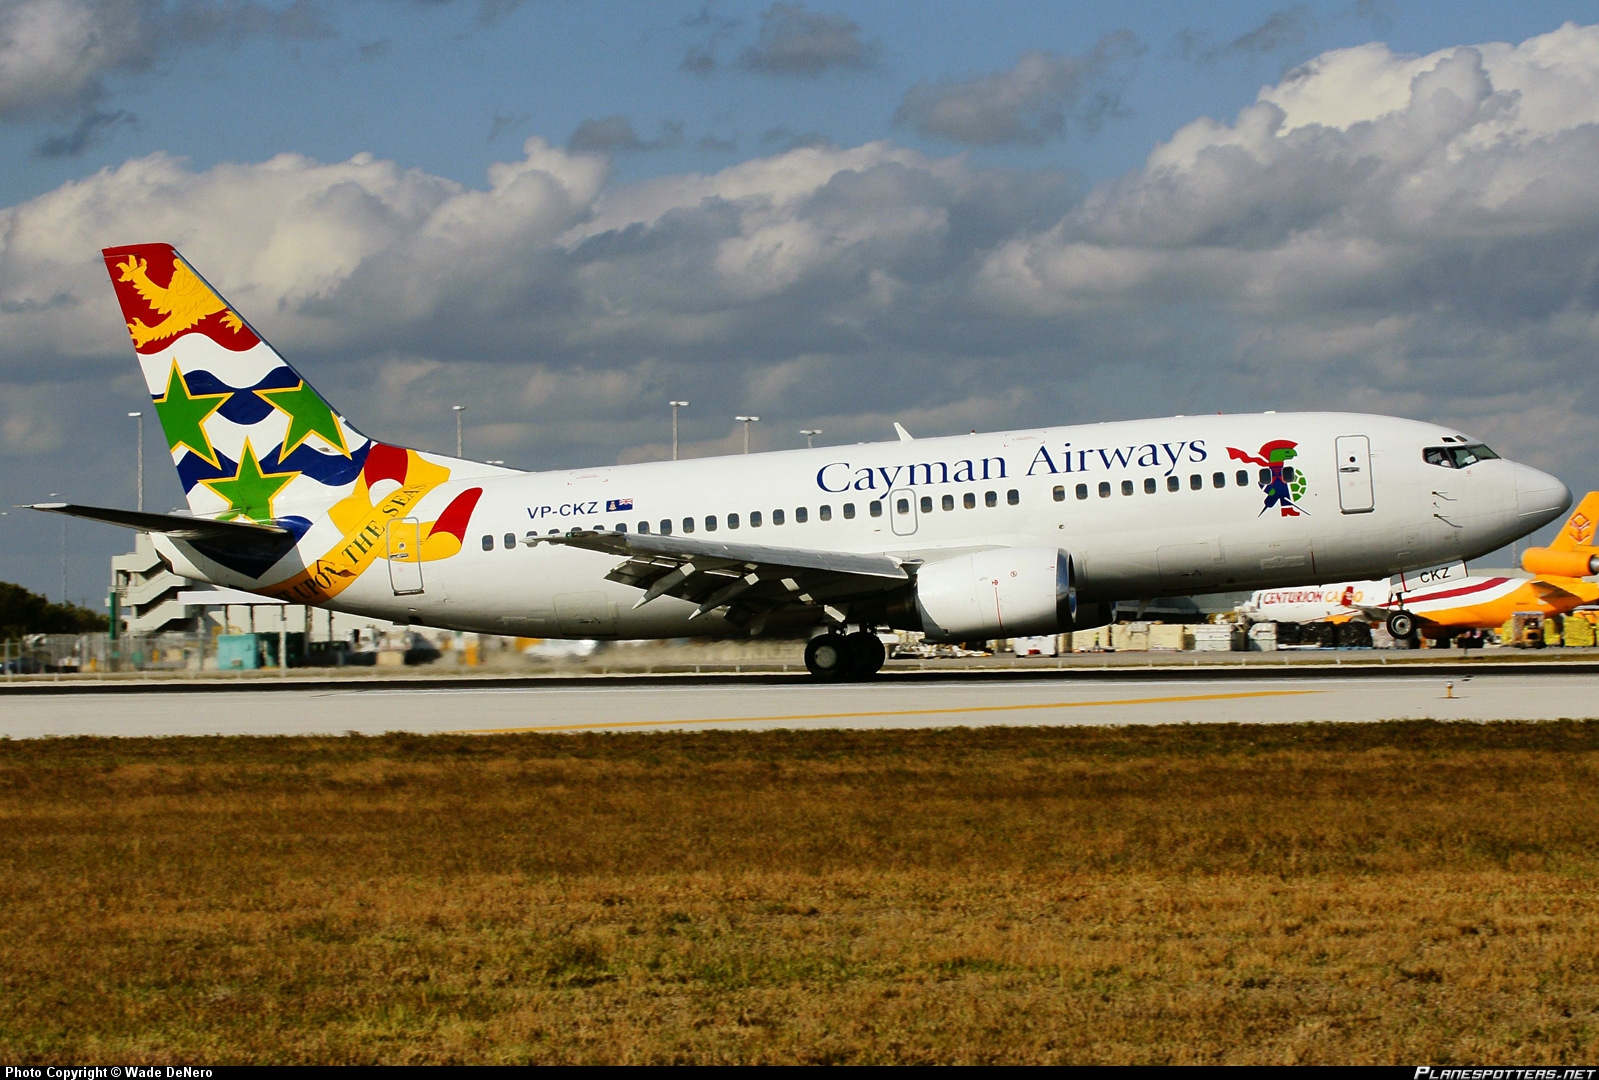 Cayman Airways announces fleet modernization plan. Cayman Airways has